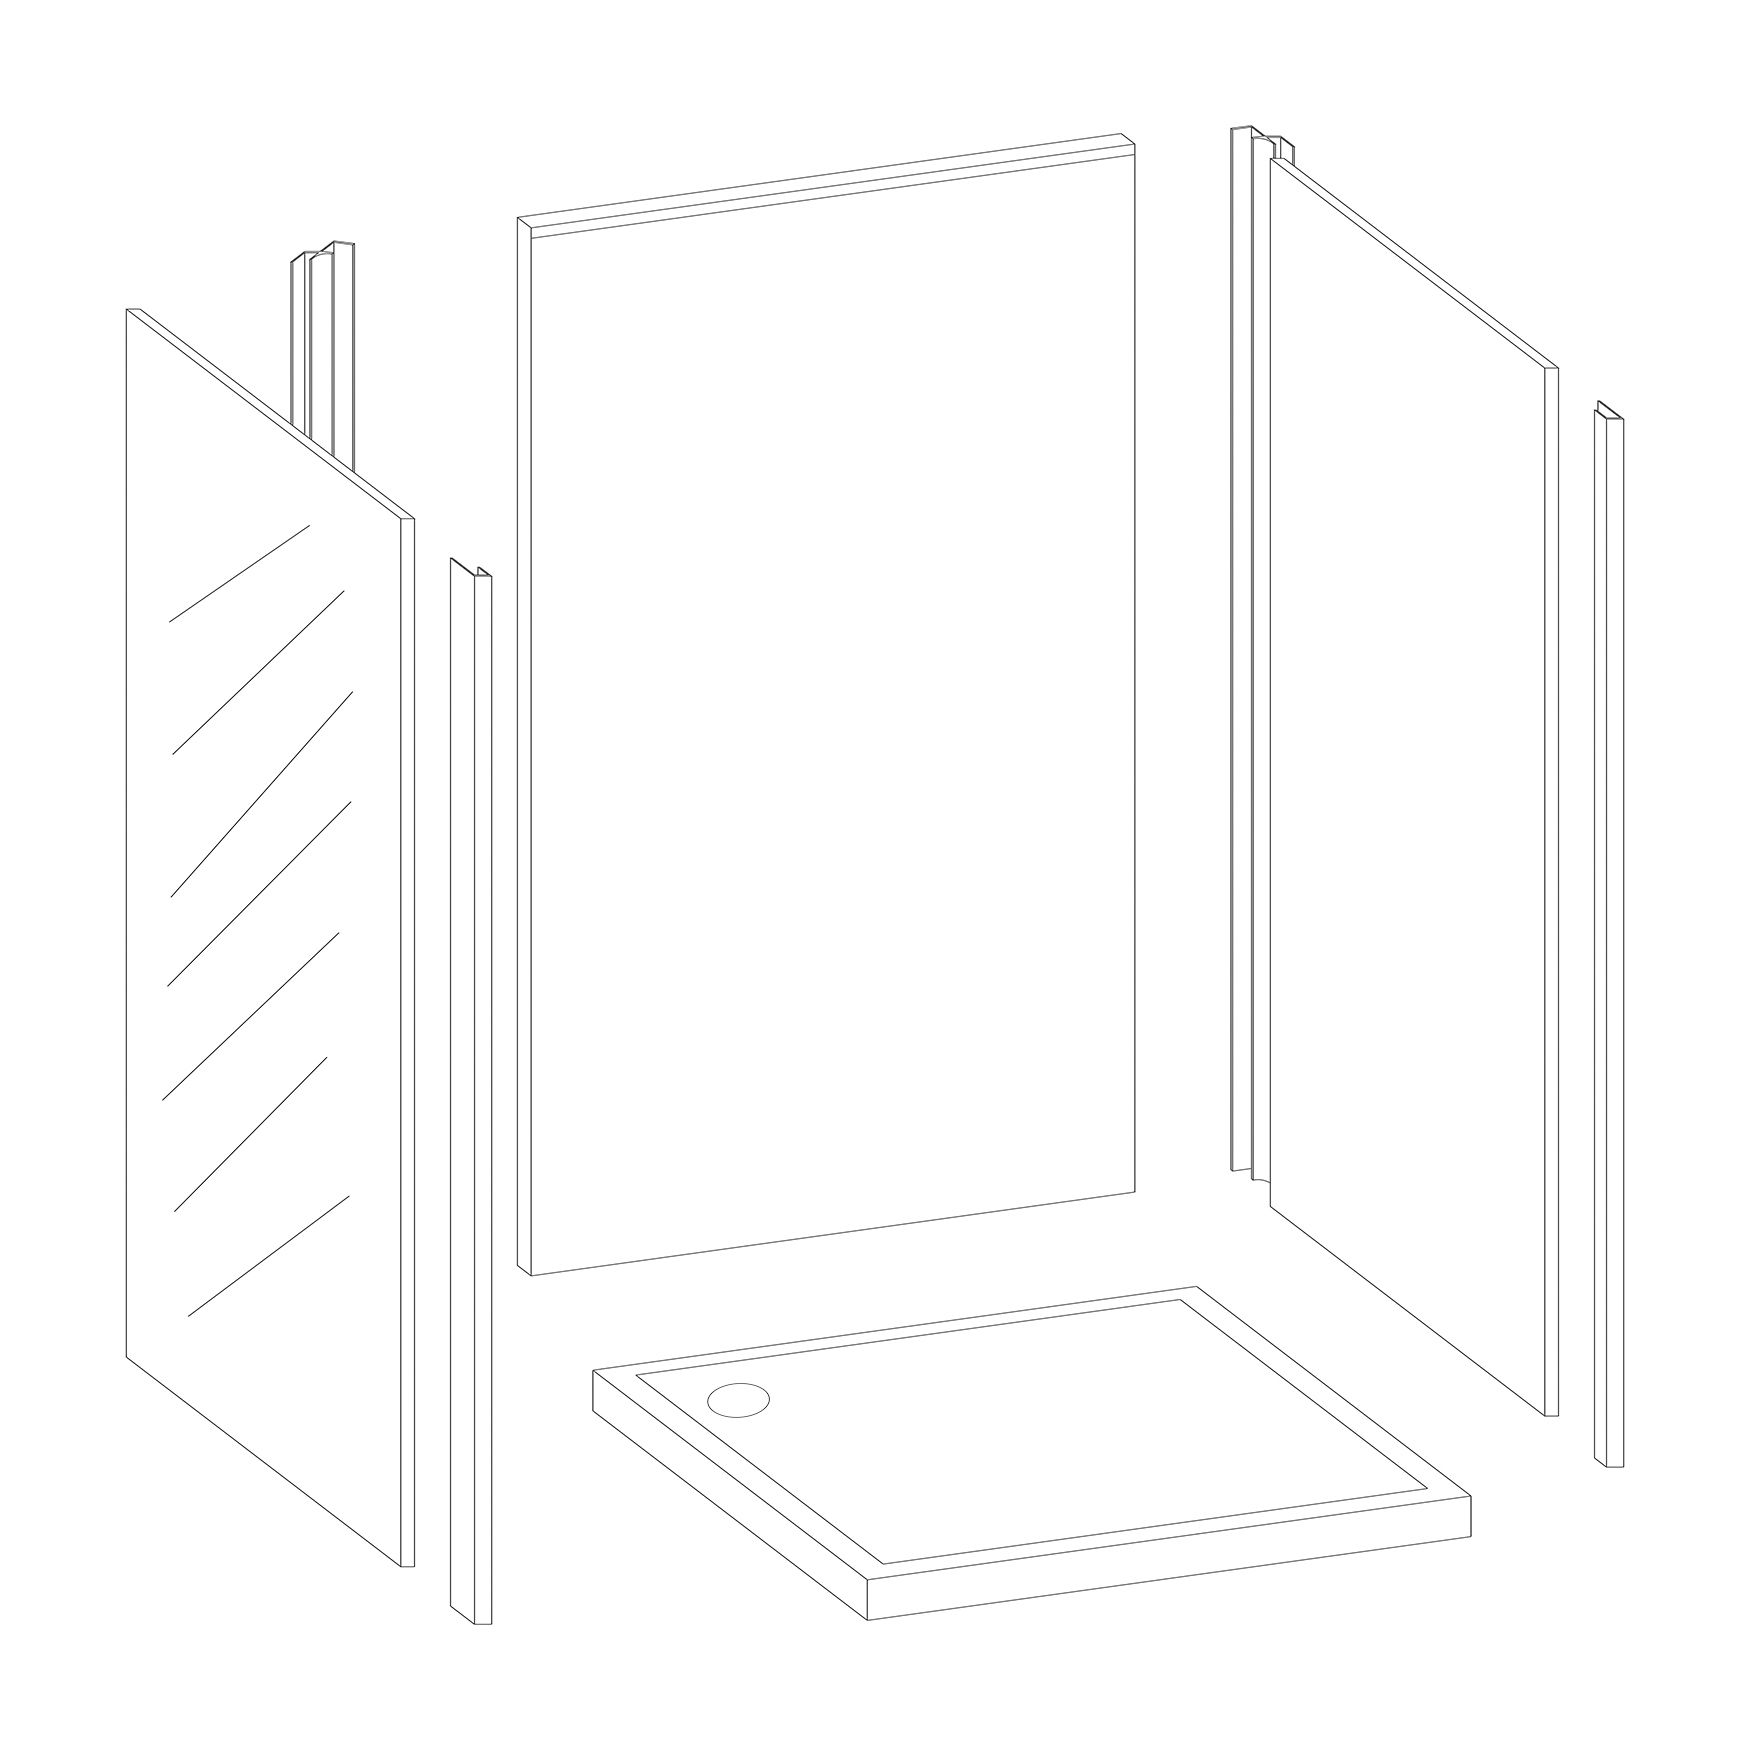 Splashwall Gloss Ivory 3 sided Shower Panel kit (L)1200mm (W)1200mm (T)4mm